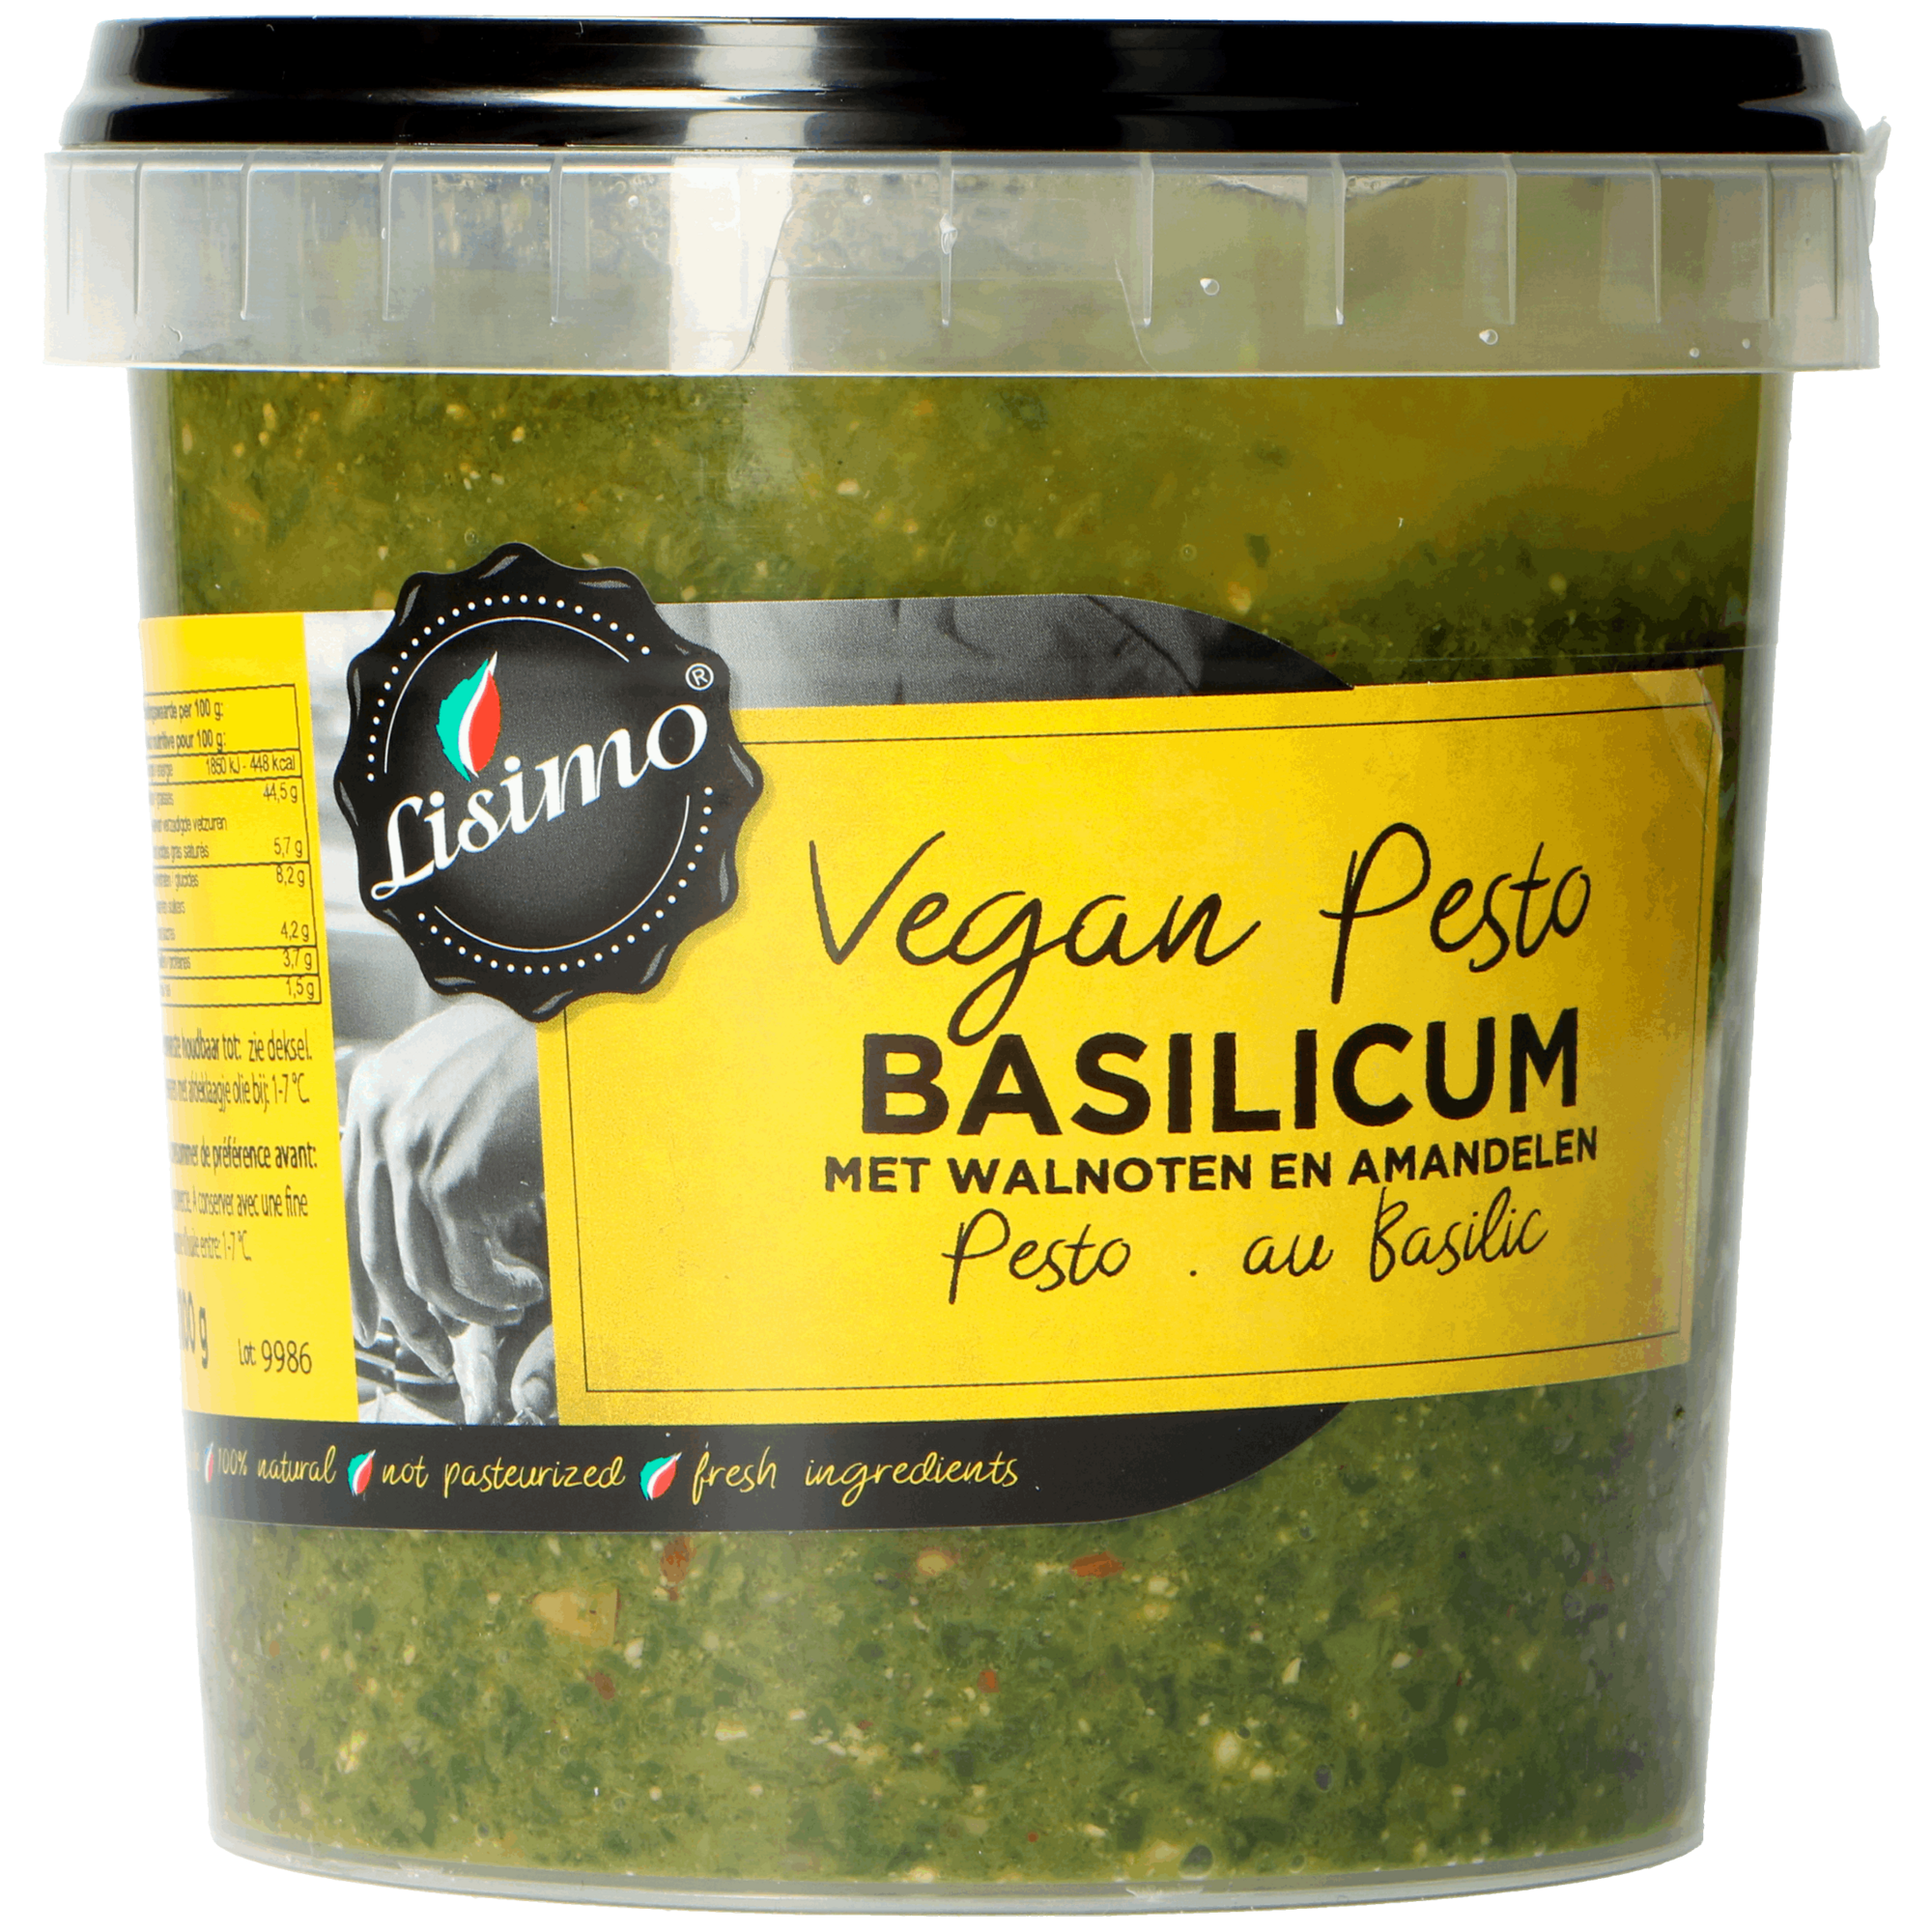 75156 Vegan pesto basilicum 1x1100 gr